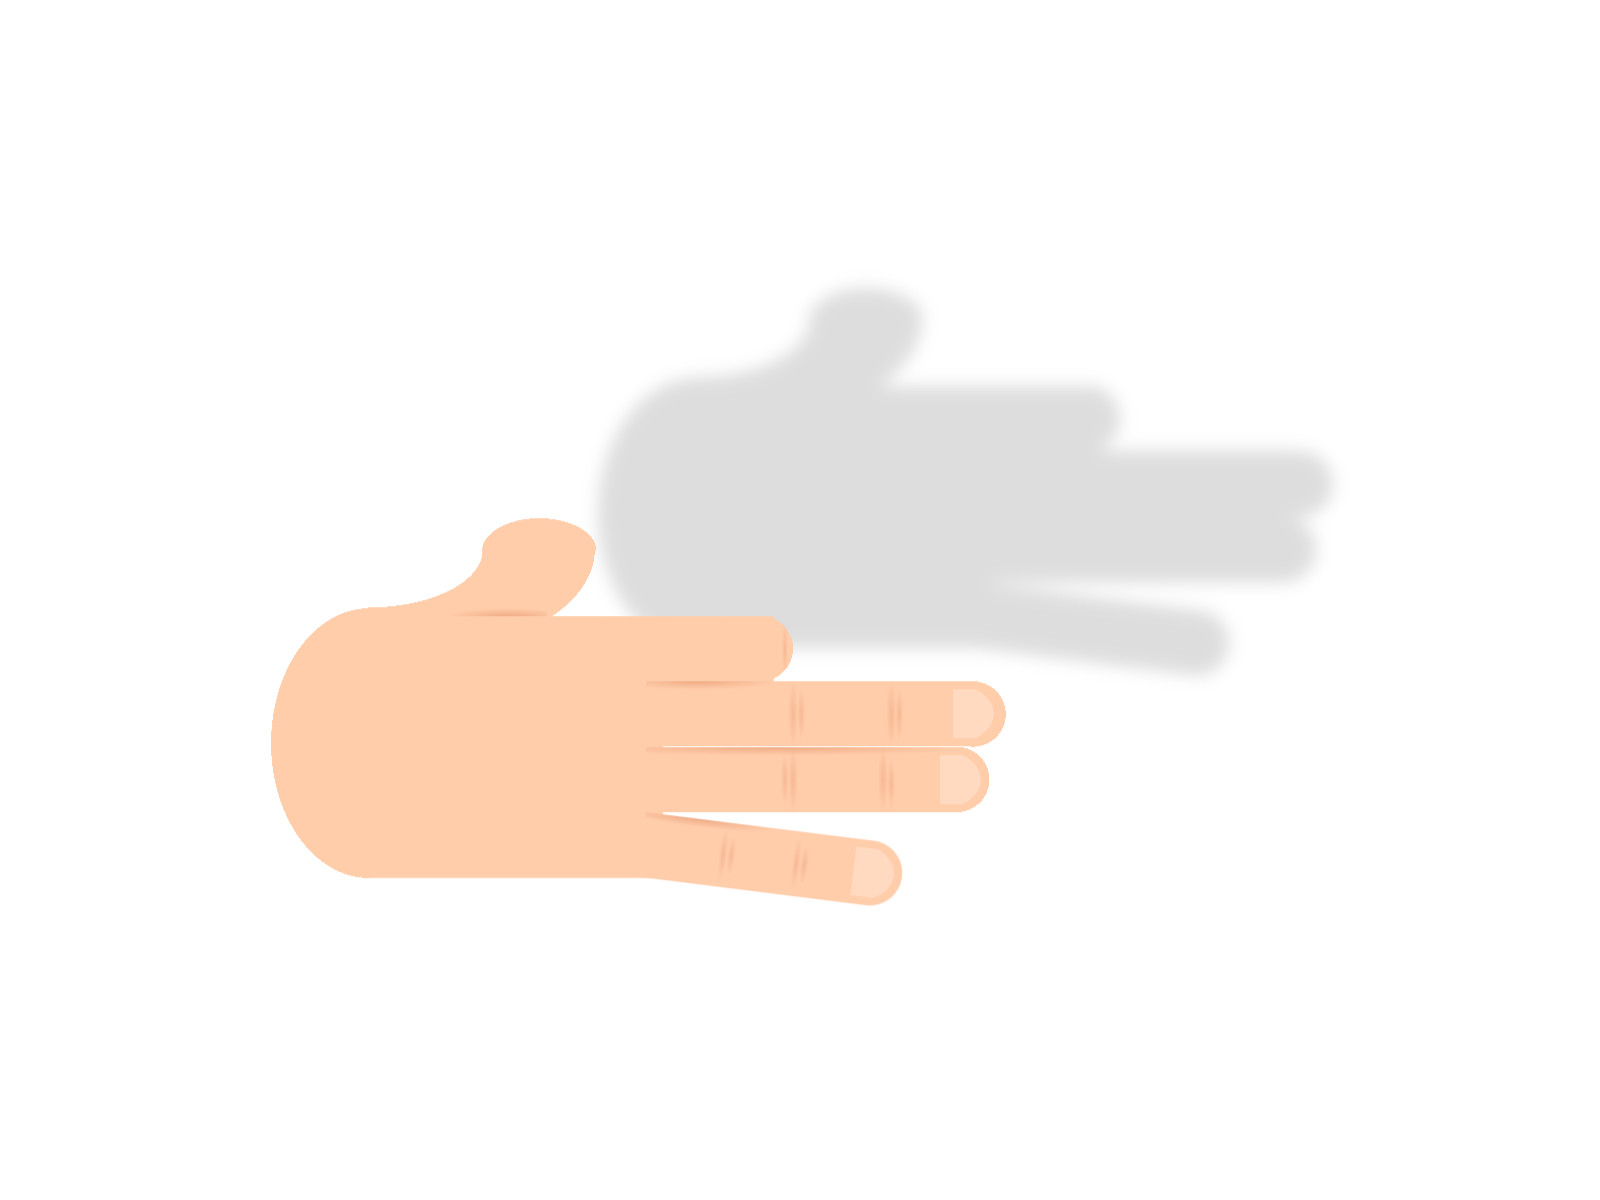 Cartoon of a hand making hand shadows